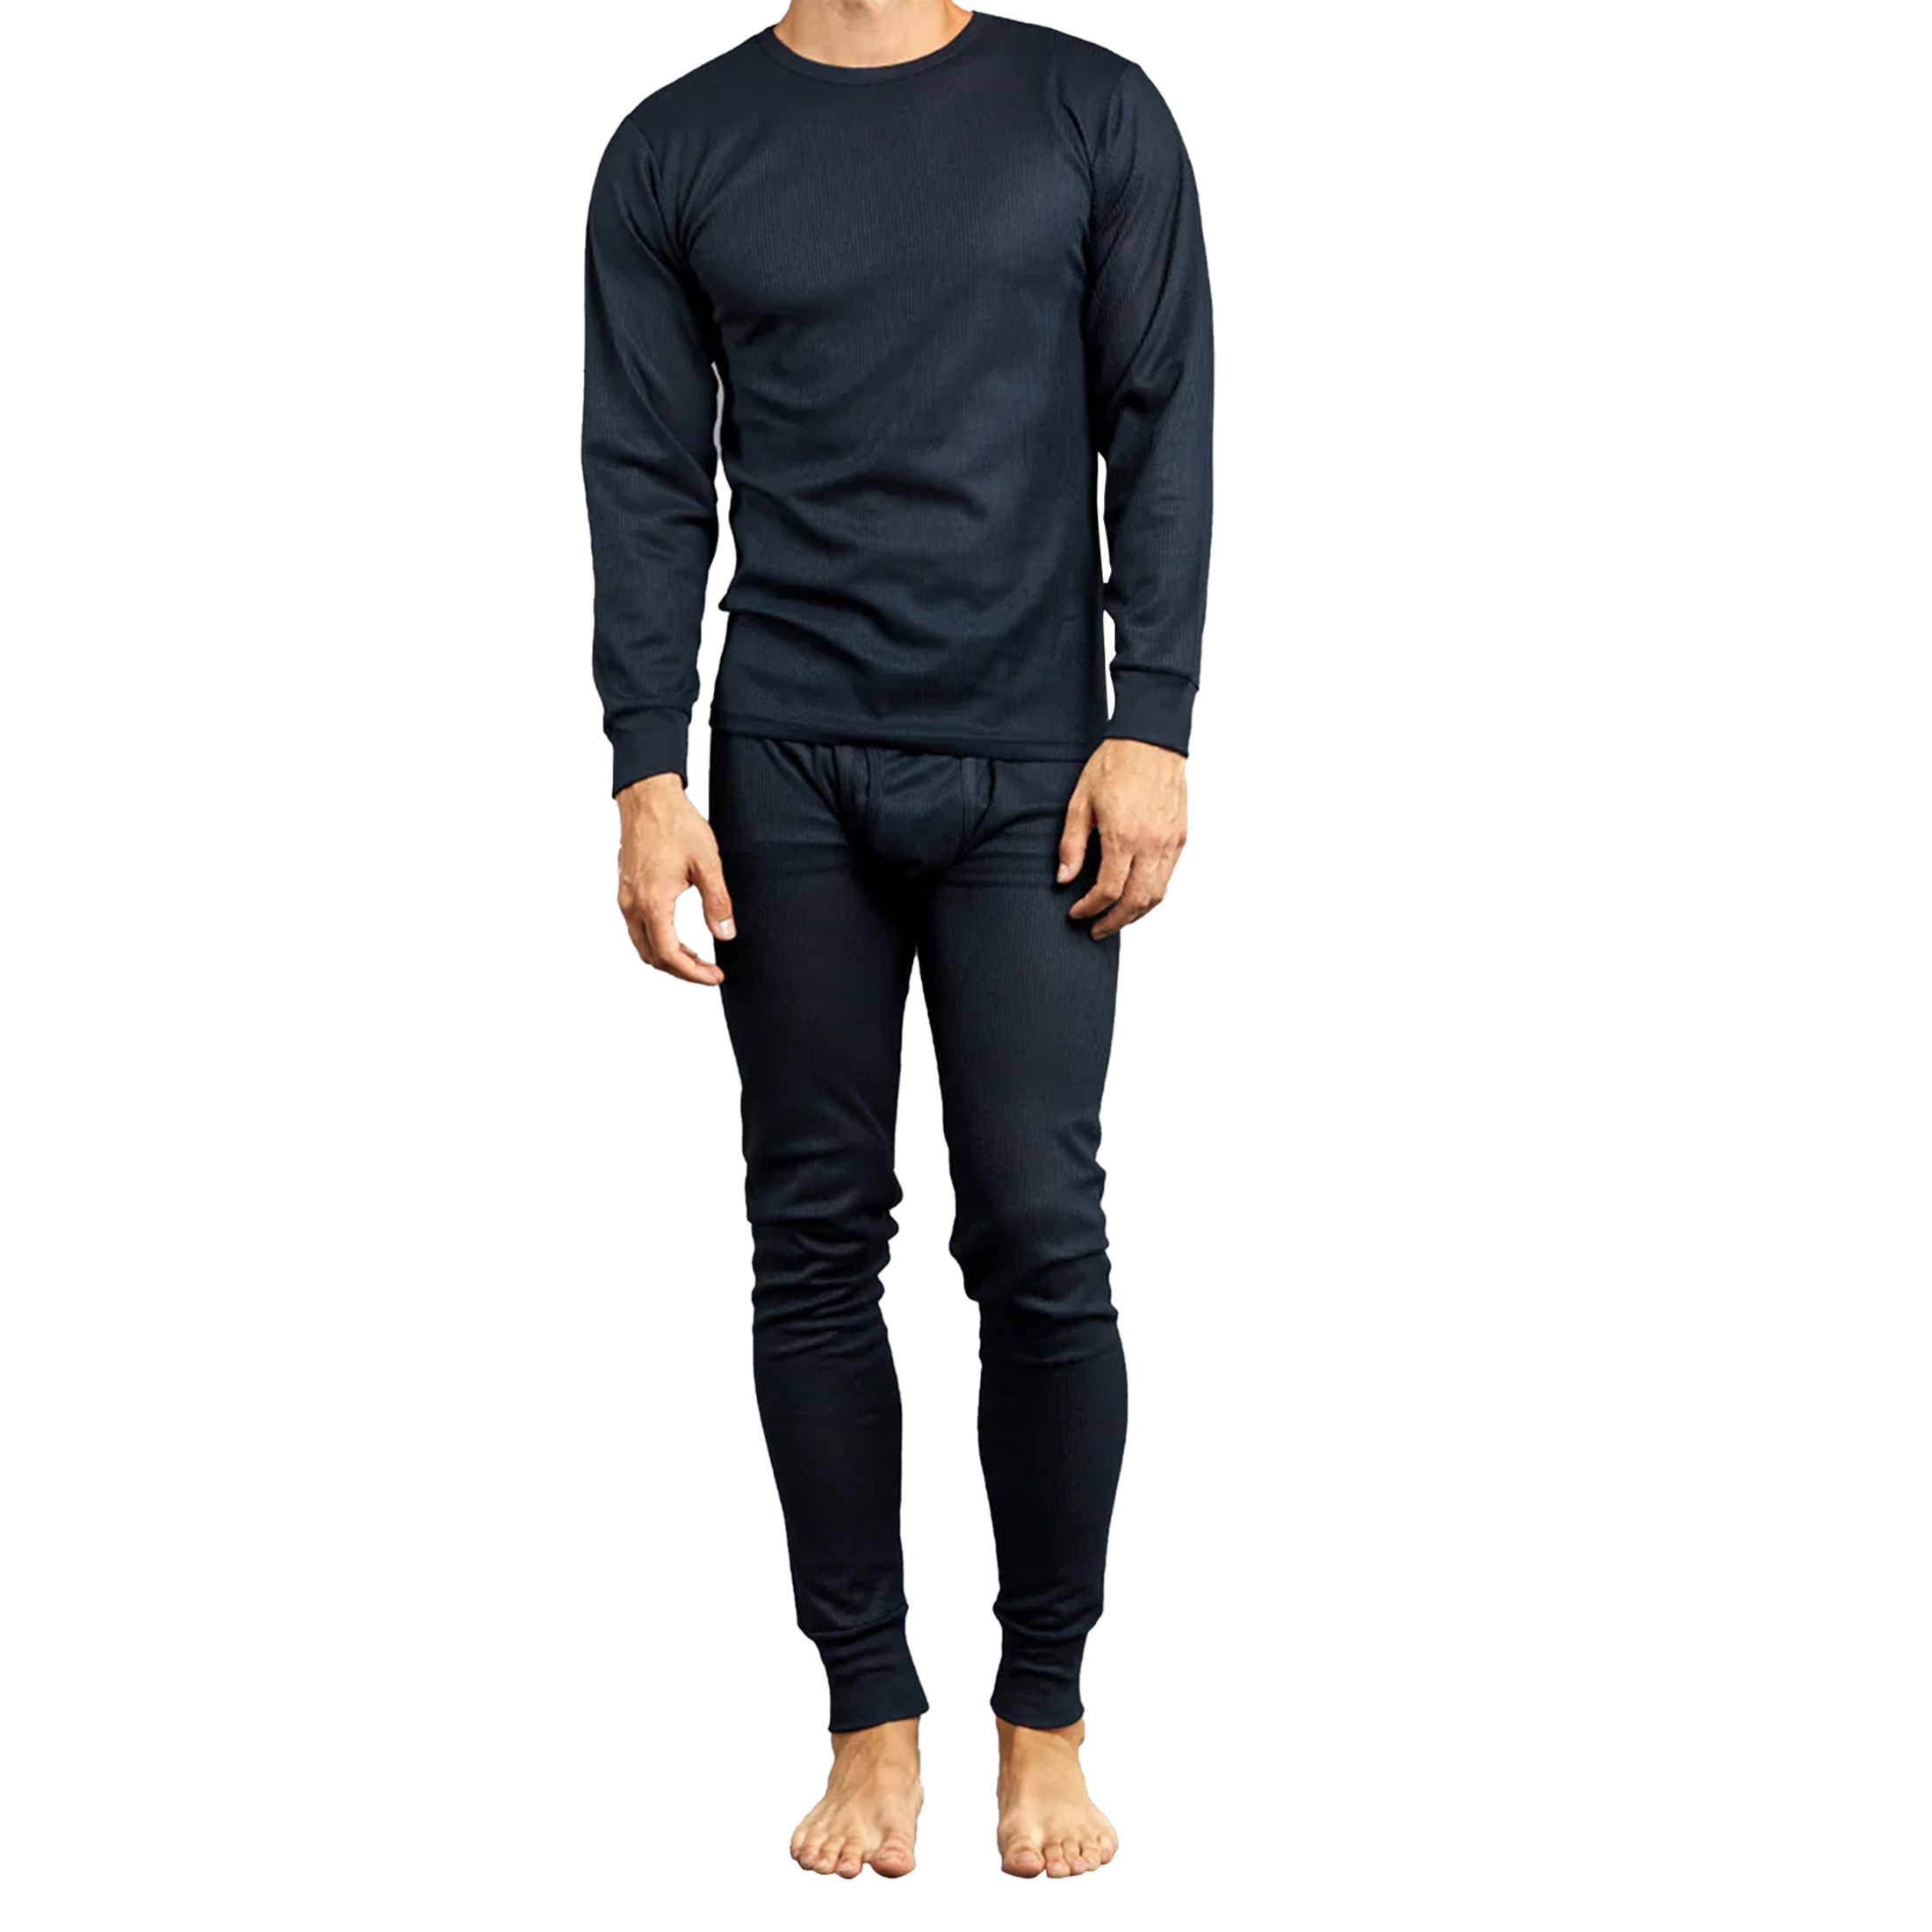 2-Piece: Men's Moisture Wicking Long Johns Base Layer Thermal Underwear Set (Top & Bottom) - Grey, Medium